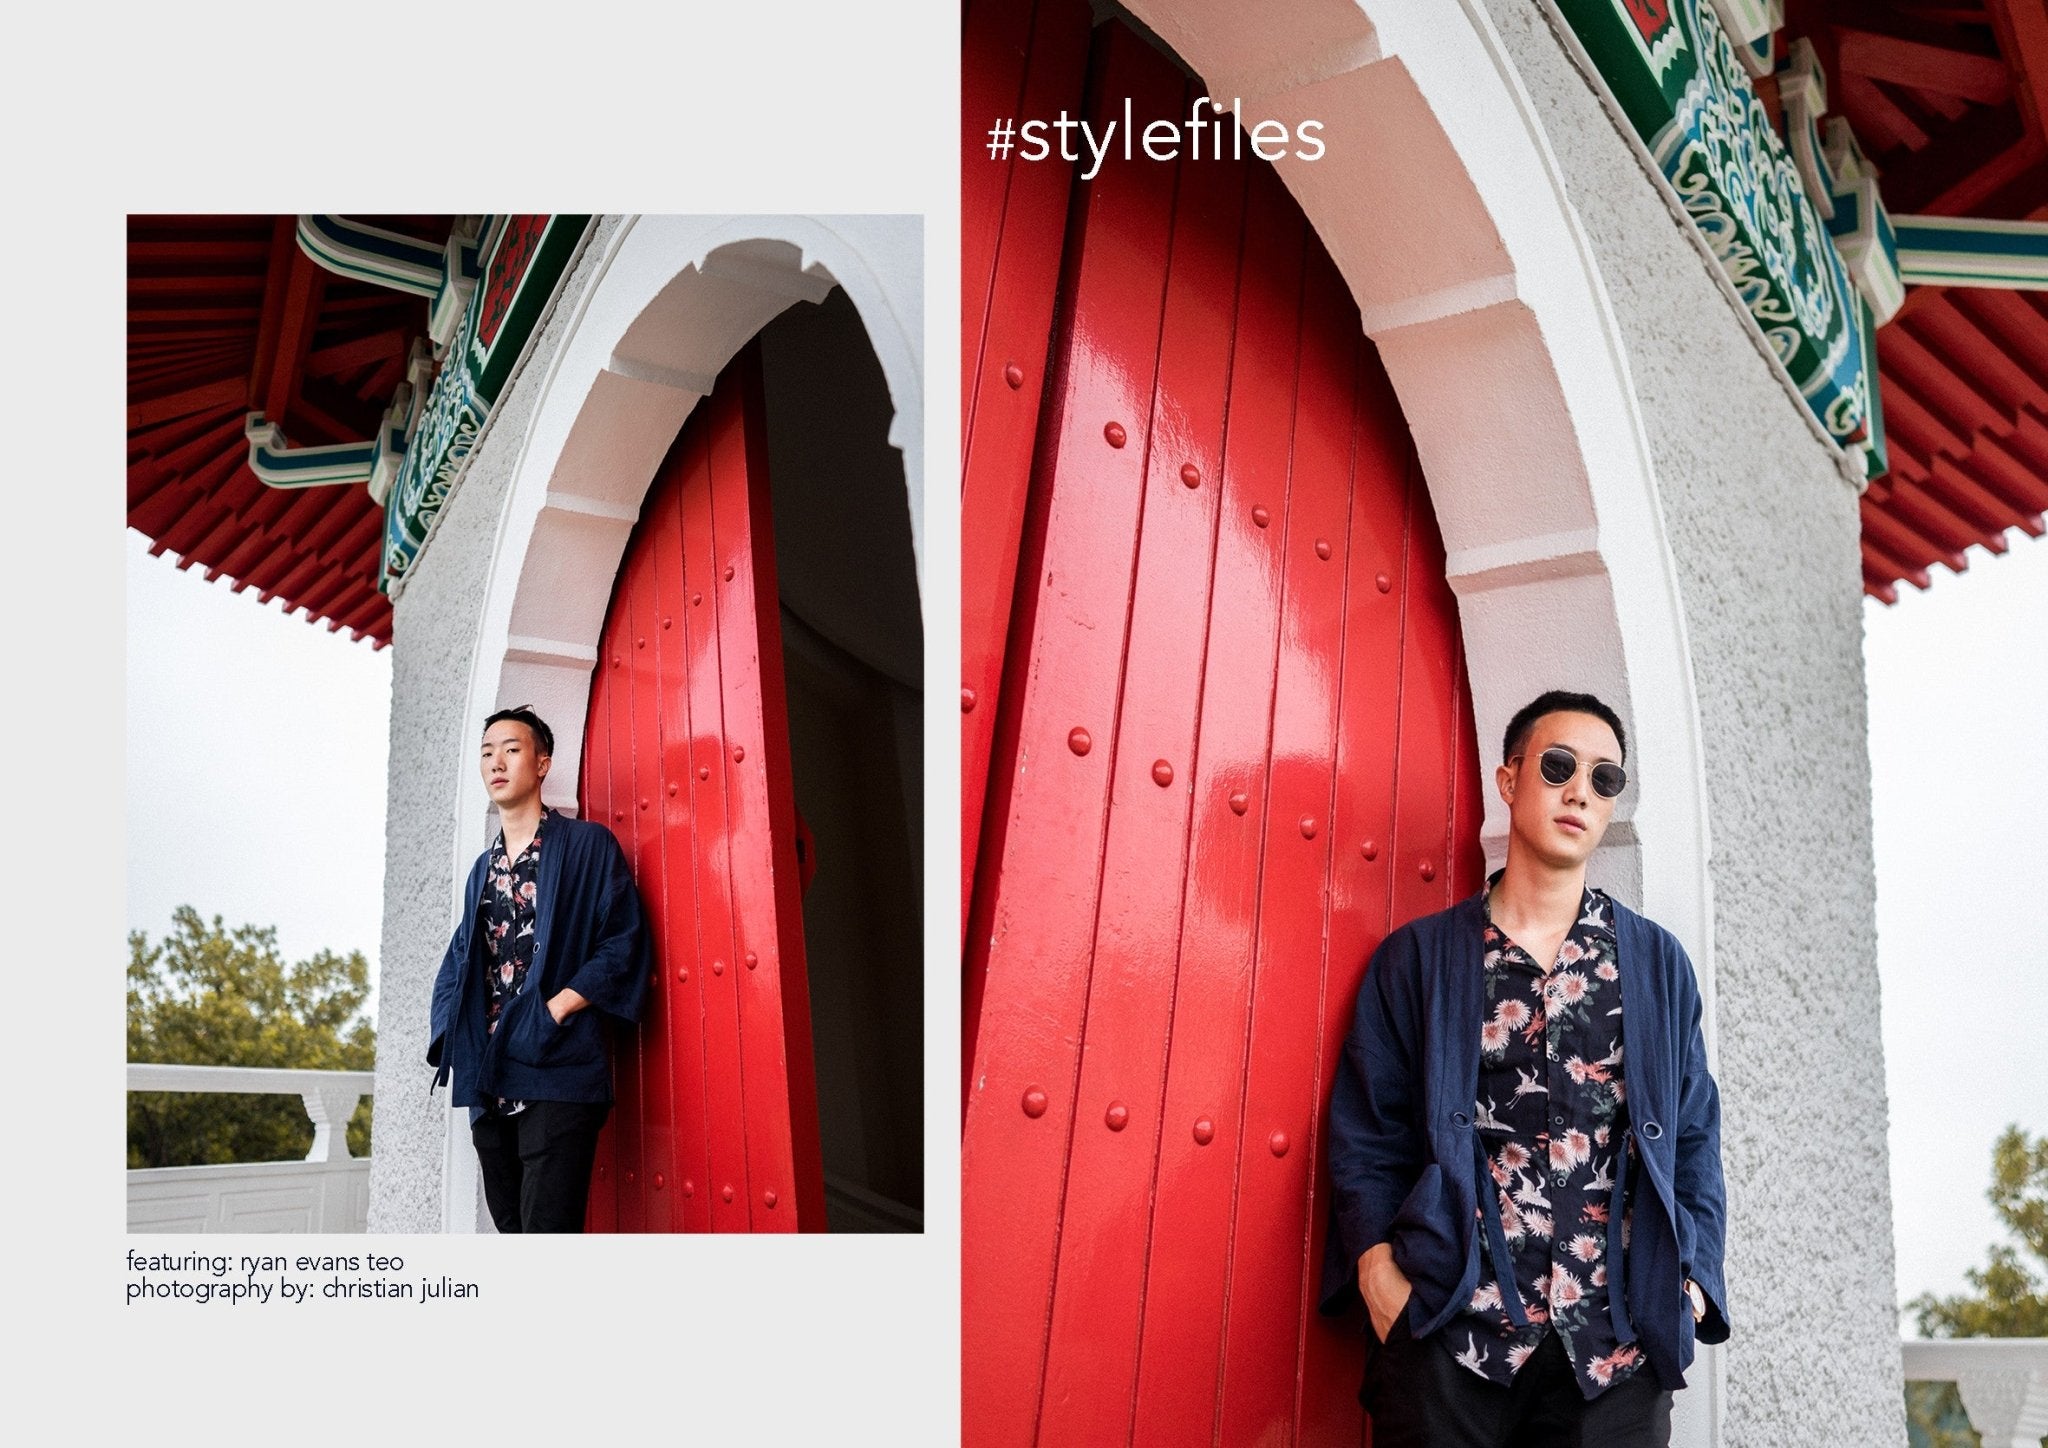 Style Files: Ryan Evans Teo - G R A Y E